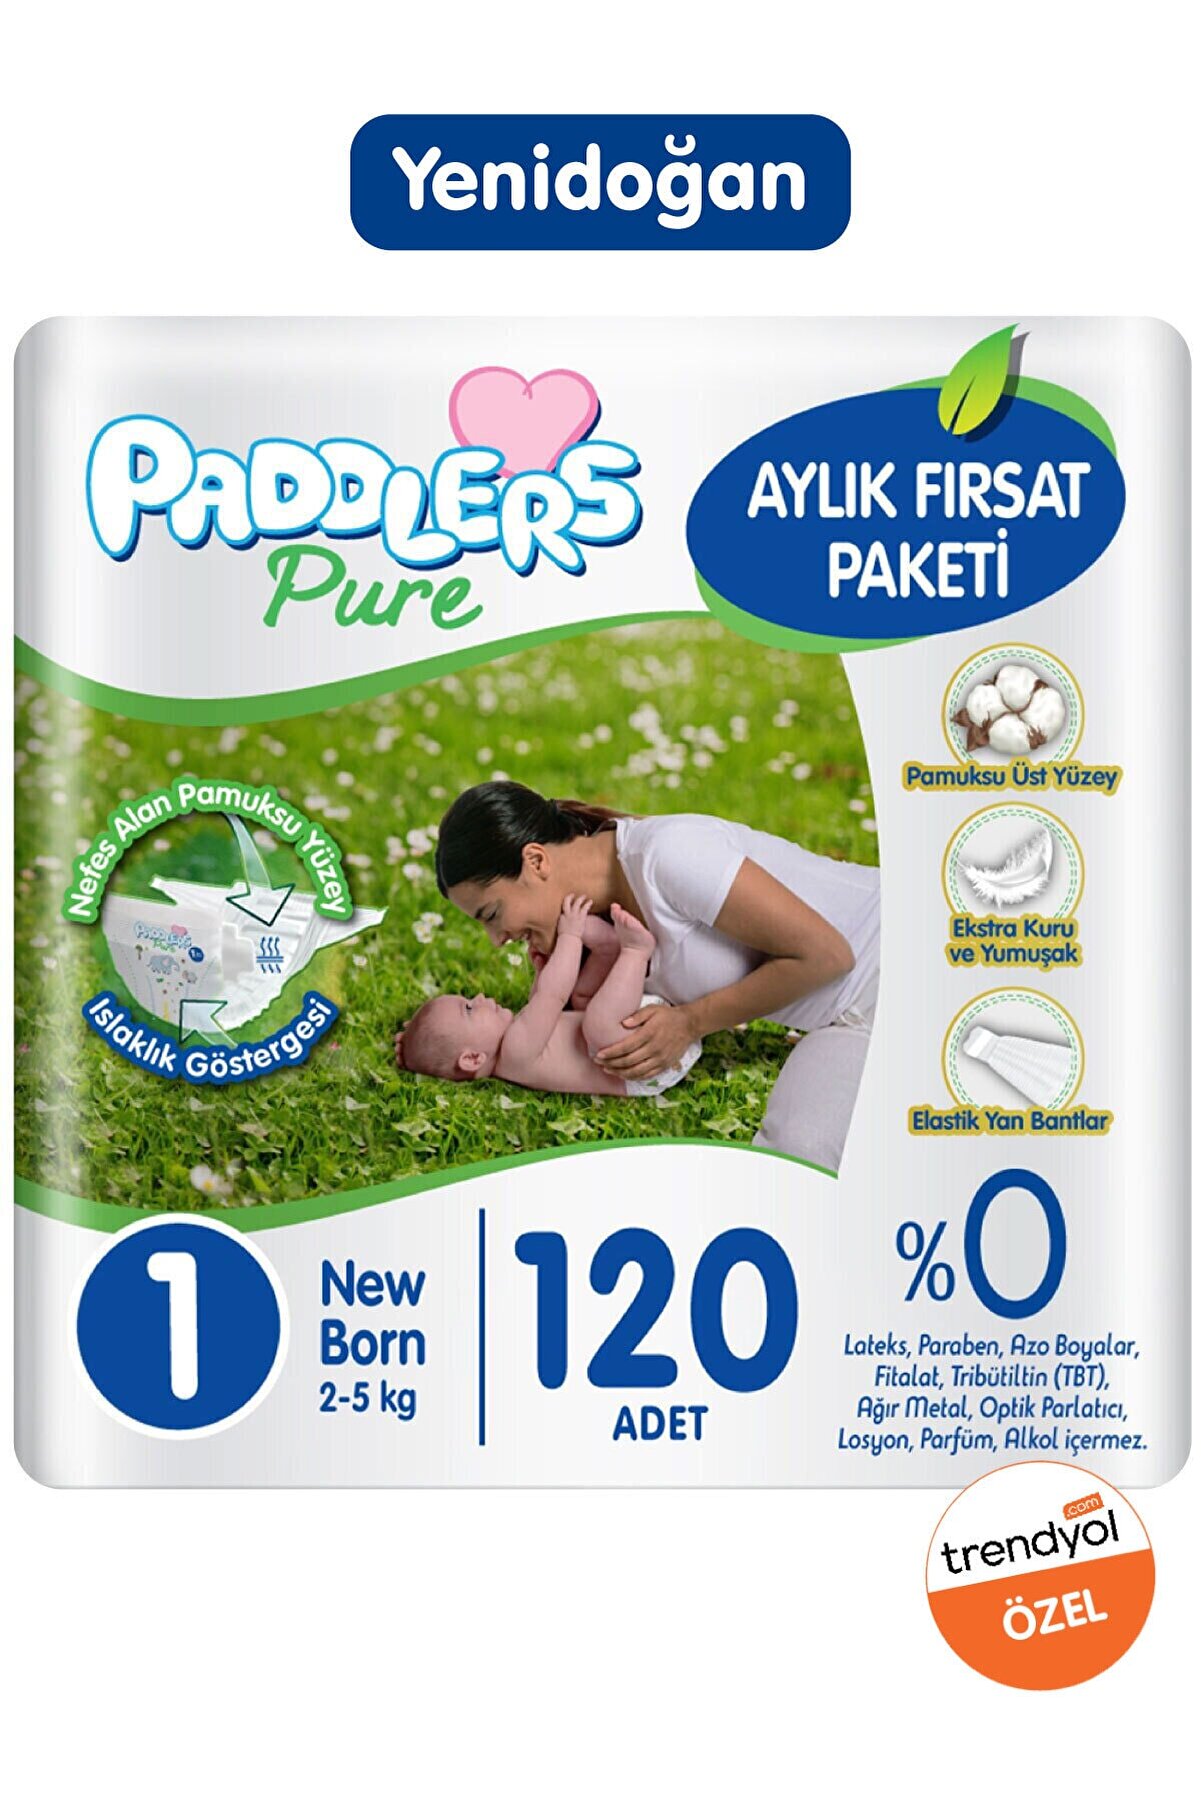 Paddlers Pure Bebek Bezi 1 Numara Yenidoğan 120 Adet ( 2-5 Kg ) Aylık Fırsat Paketi